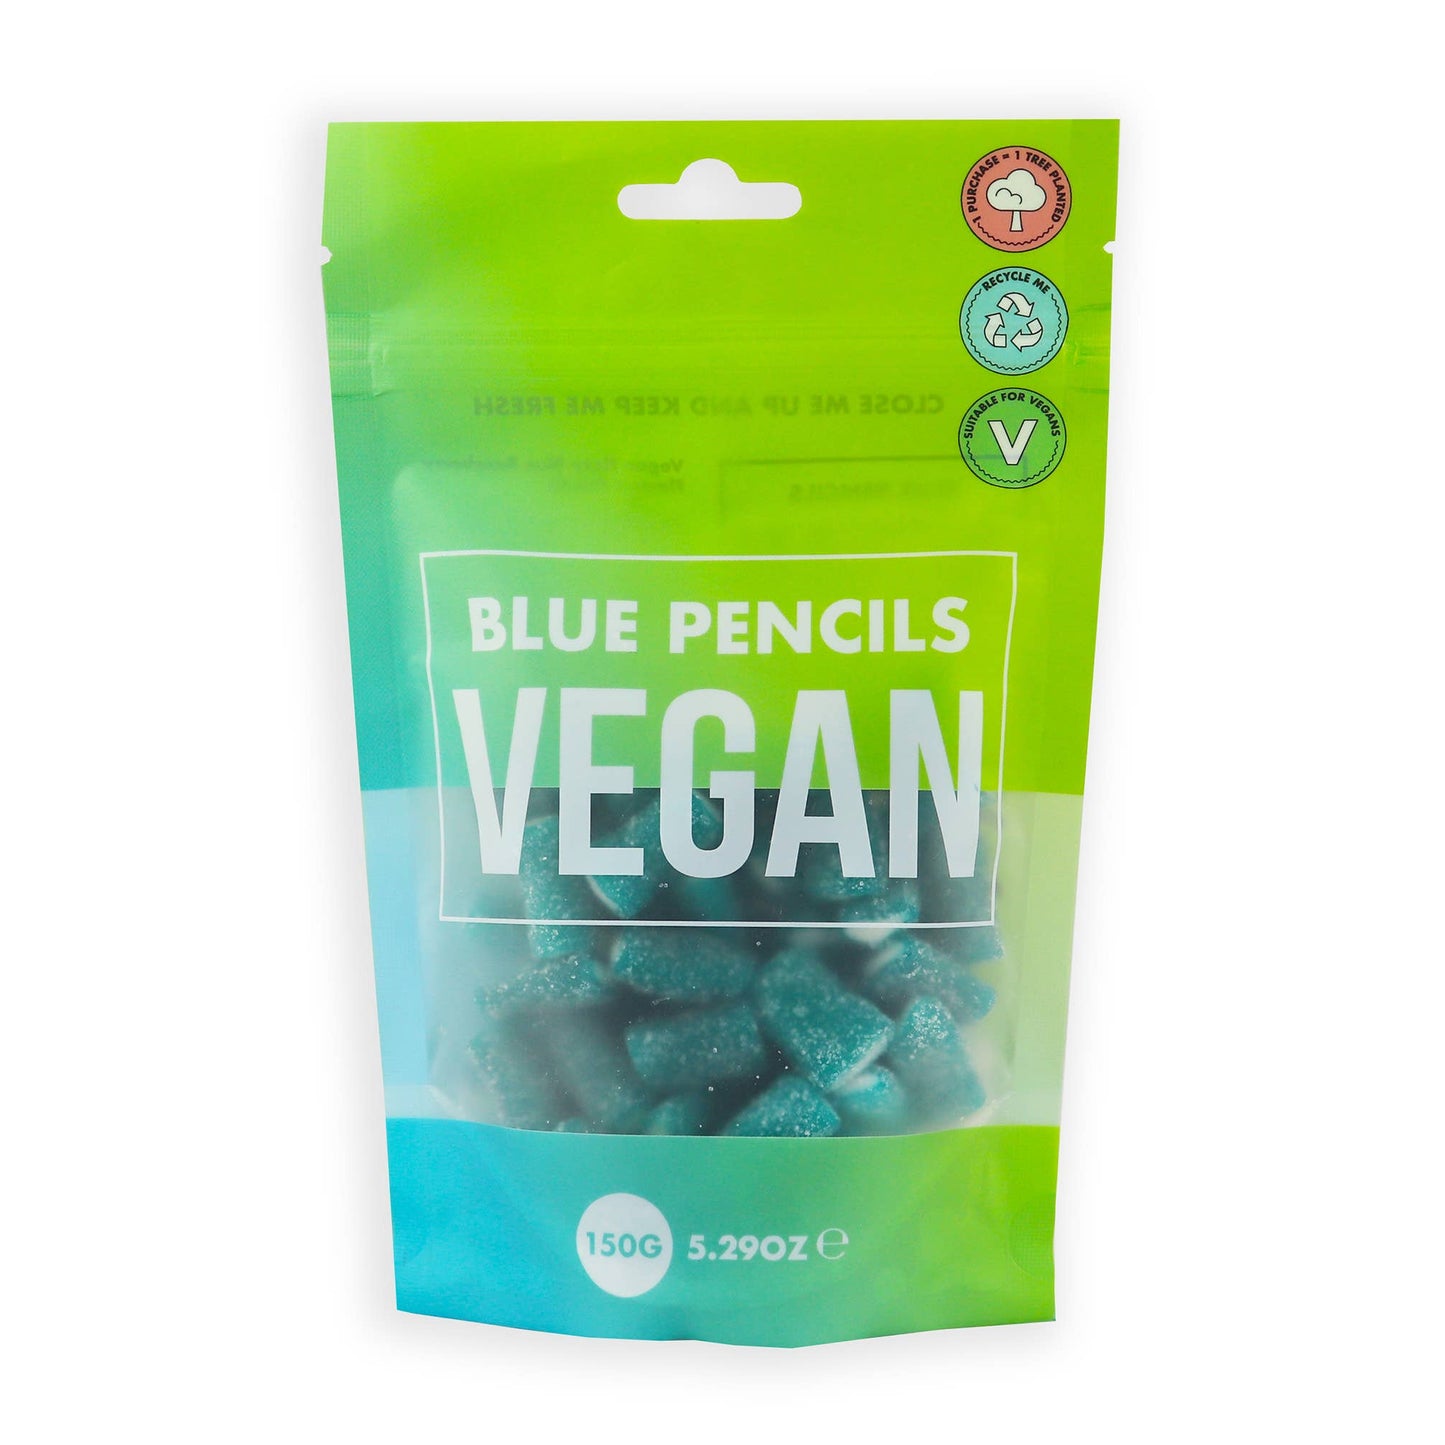 Blue Raspberry Pencils Vegan Pouch 150g